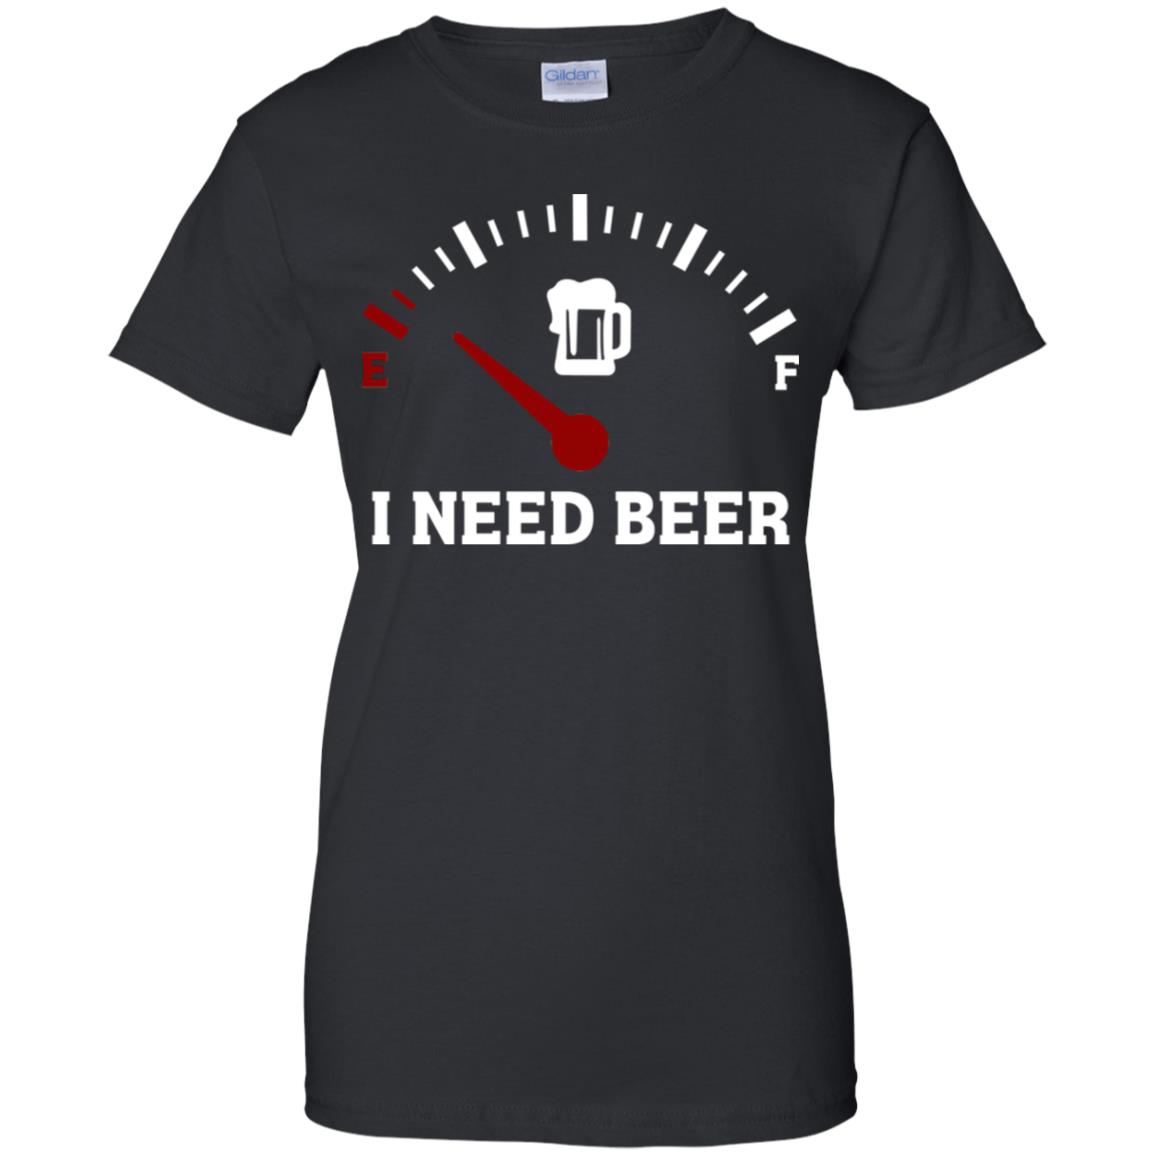 i need beer t shirt